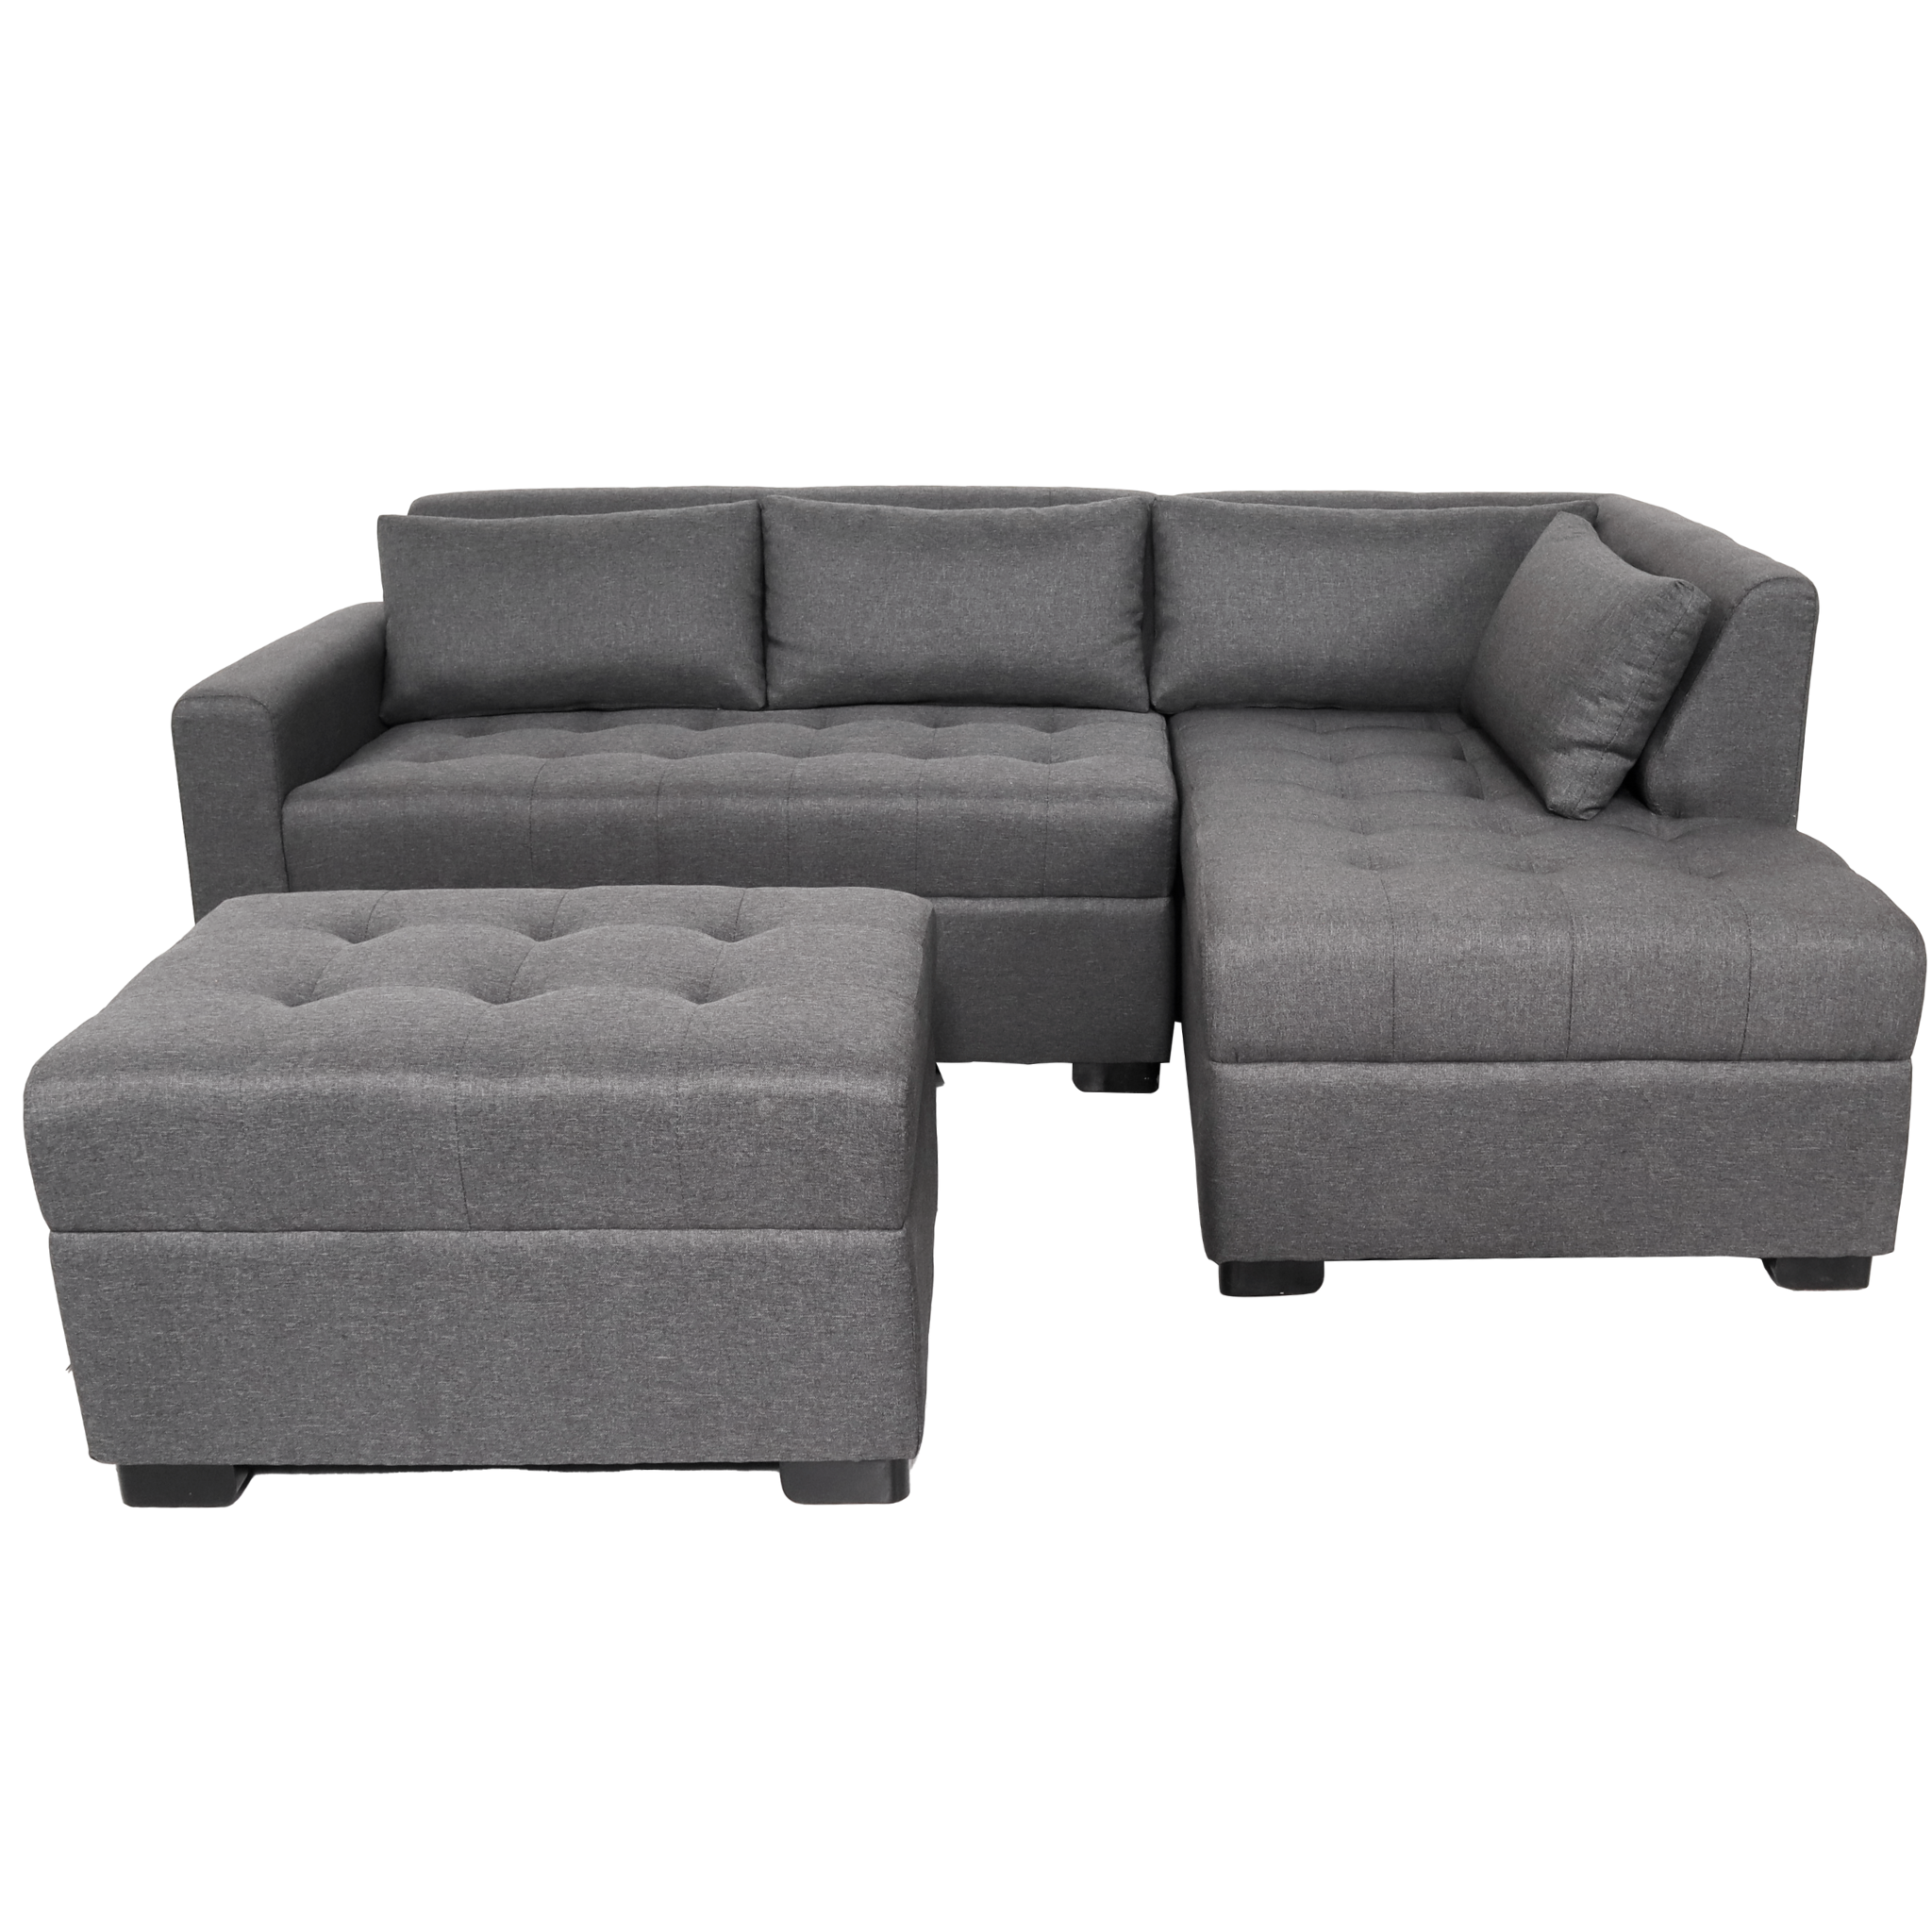 SOLANA L- Shape Fabric Sofa with Ottoman AF Home